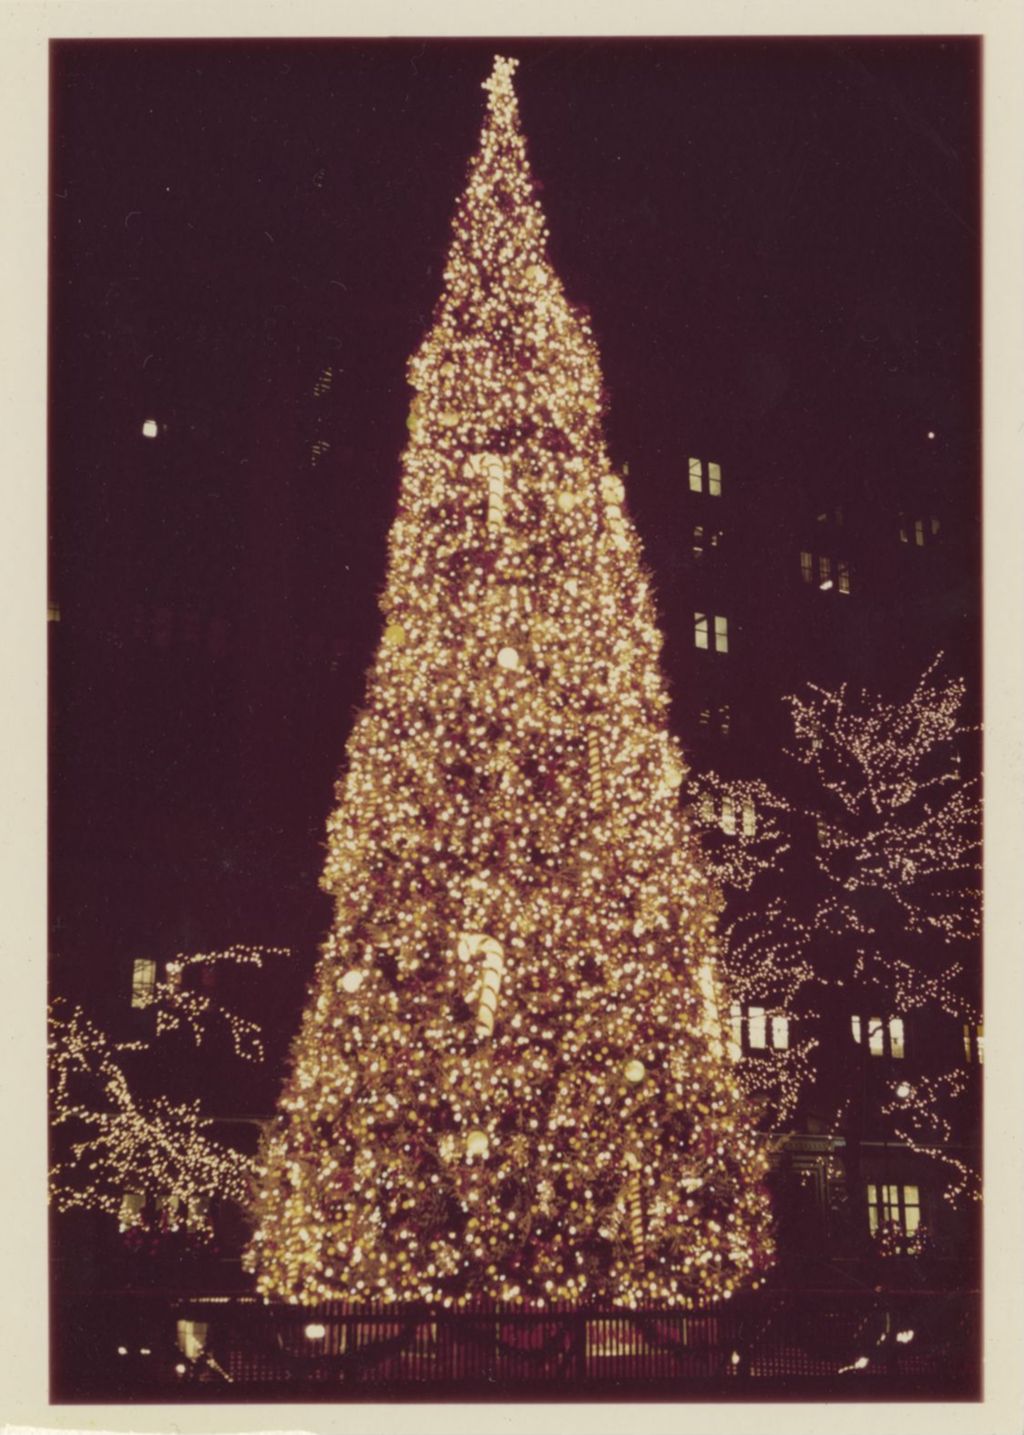 Miniature of Christmas tree illuminated at night